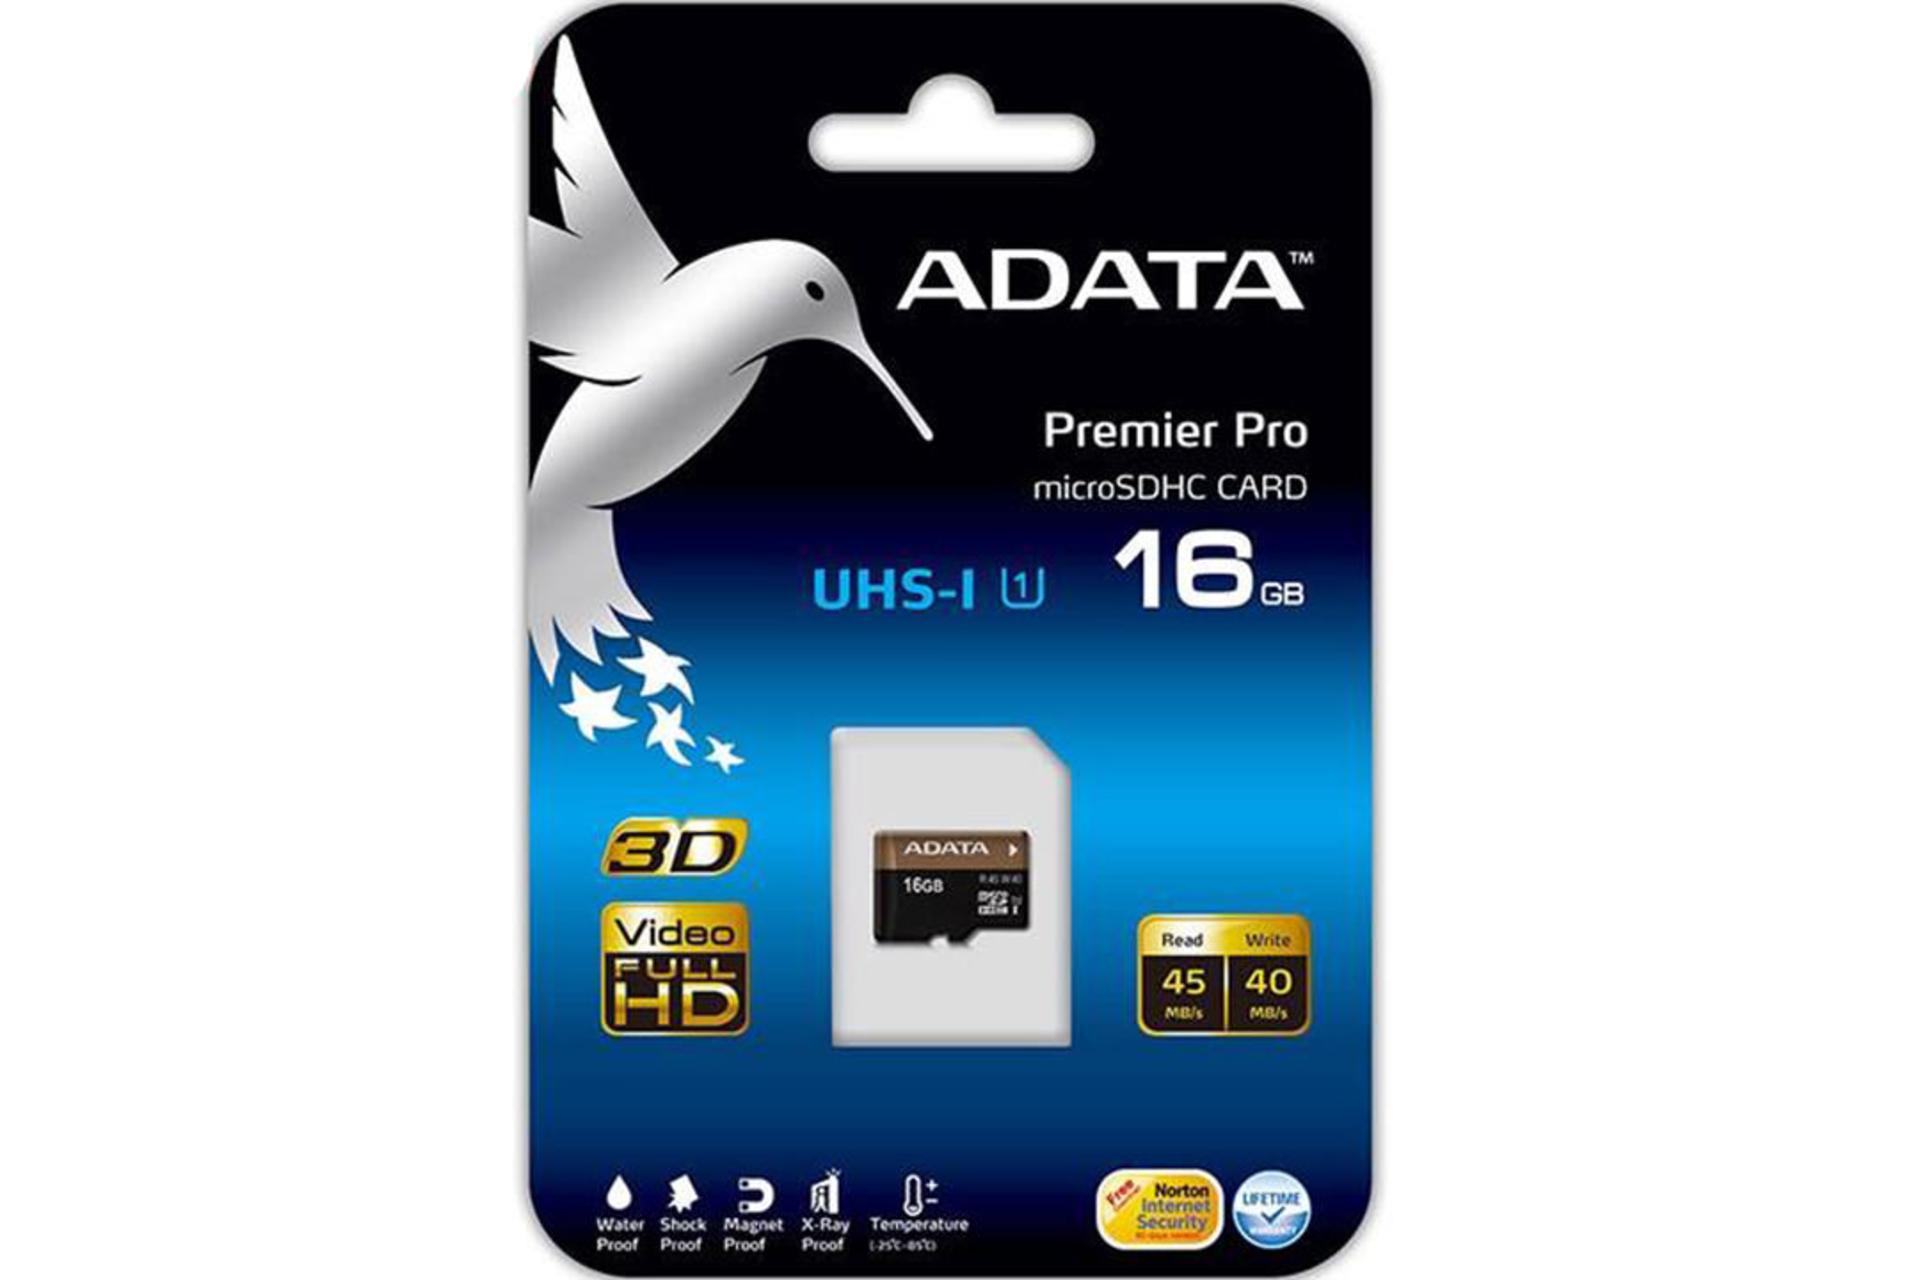 ADATA Premier Pro microSDHC Class 10 UHS-I U1 16GB